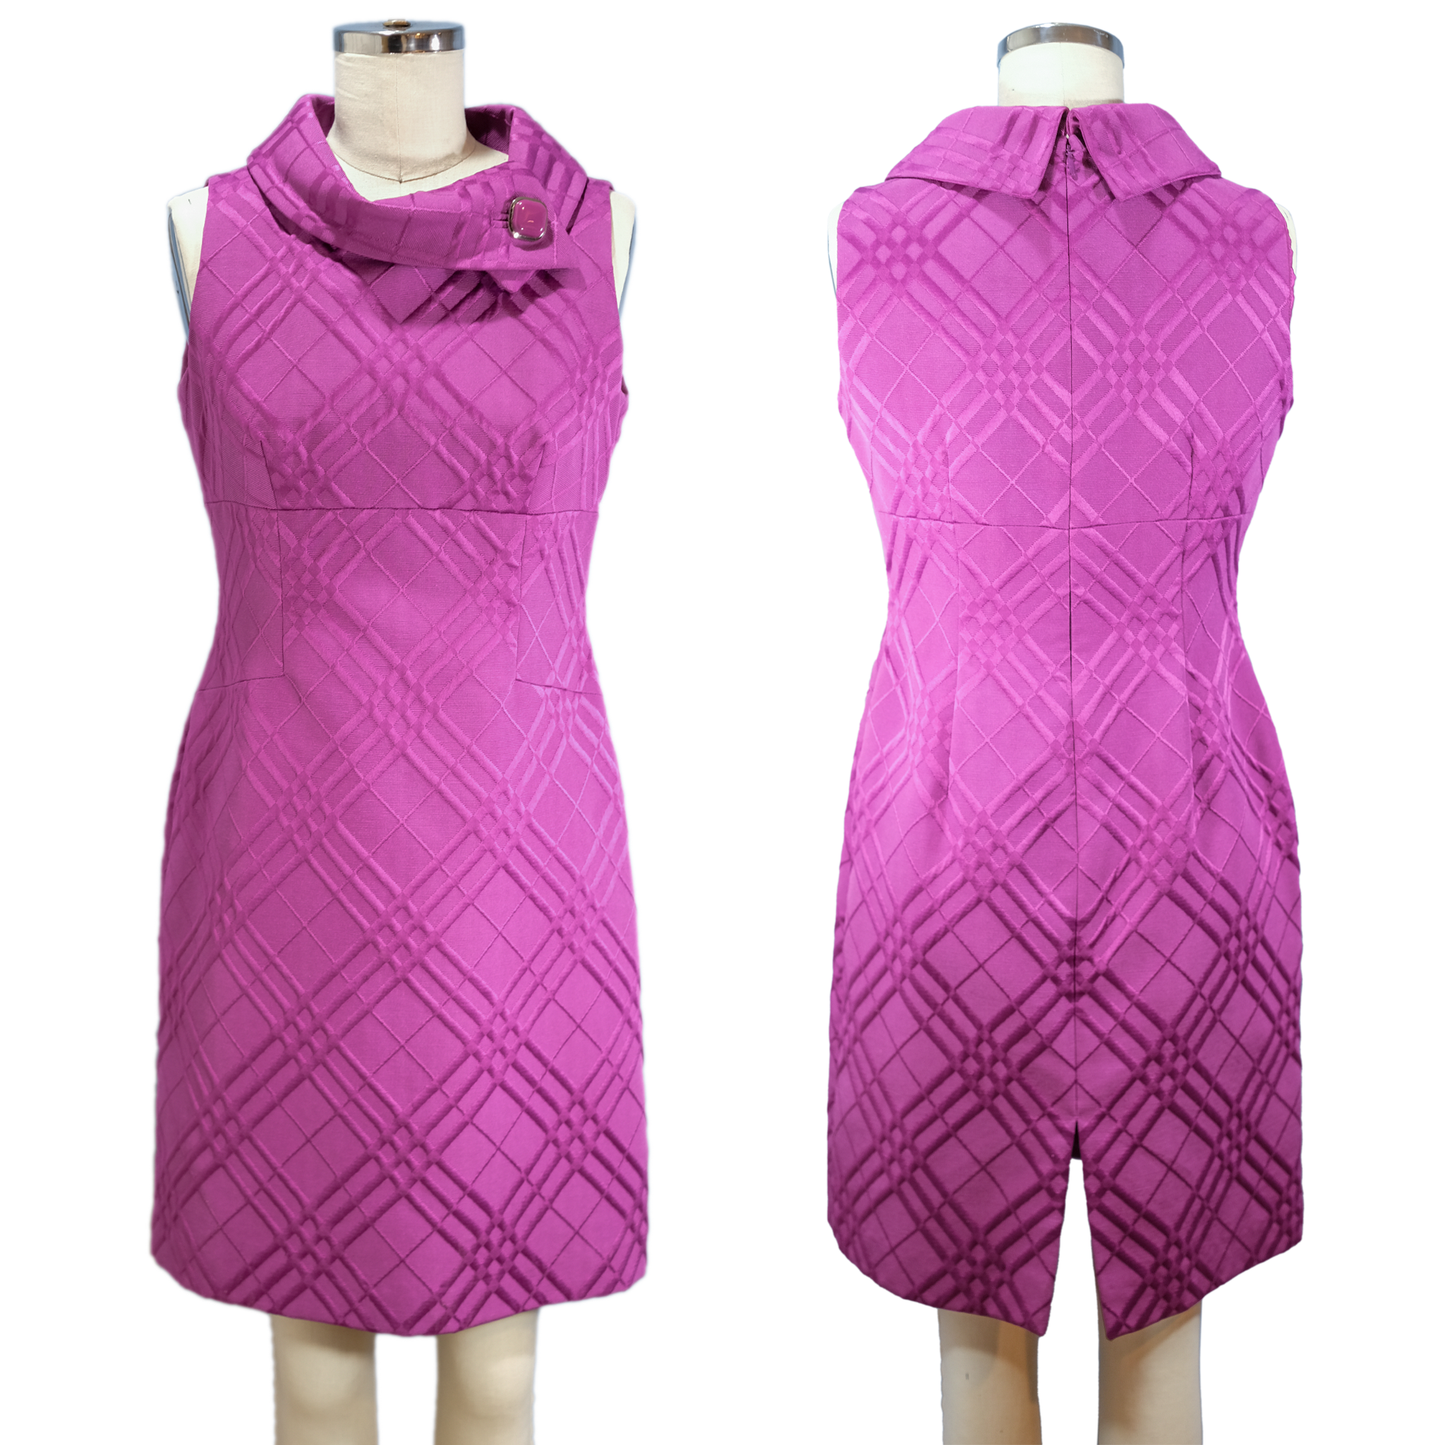 Tahari Arthur S. Levine Lilac Empire Waist Shift Dress - Size 6P - Pre-owned